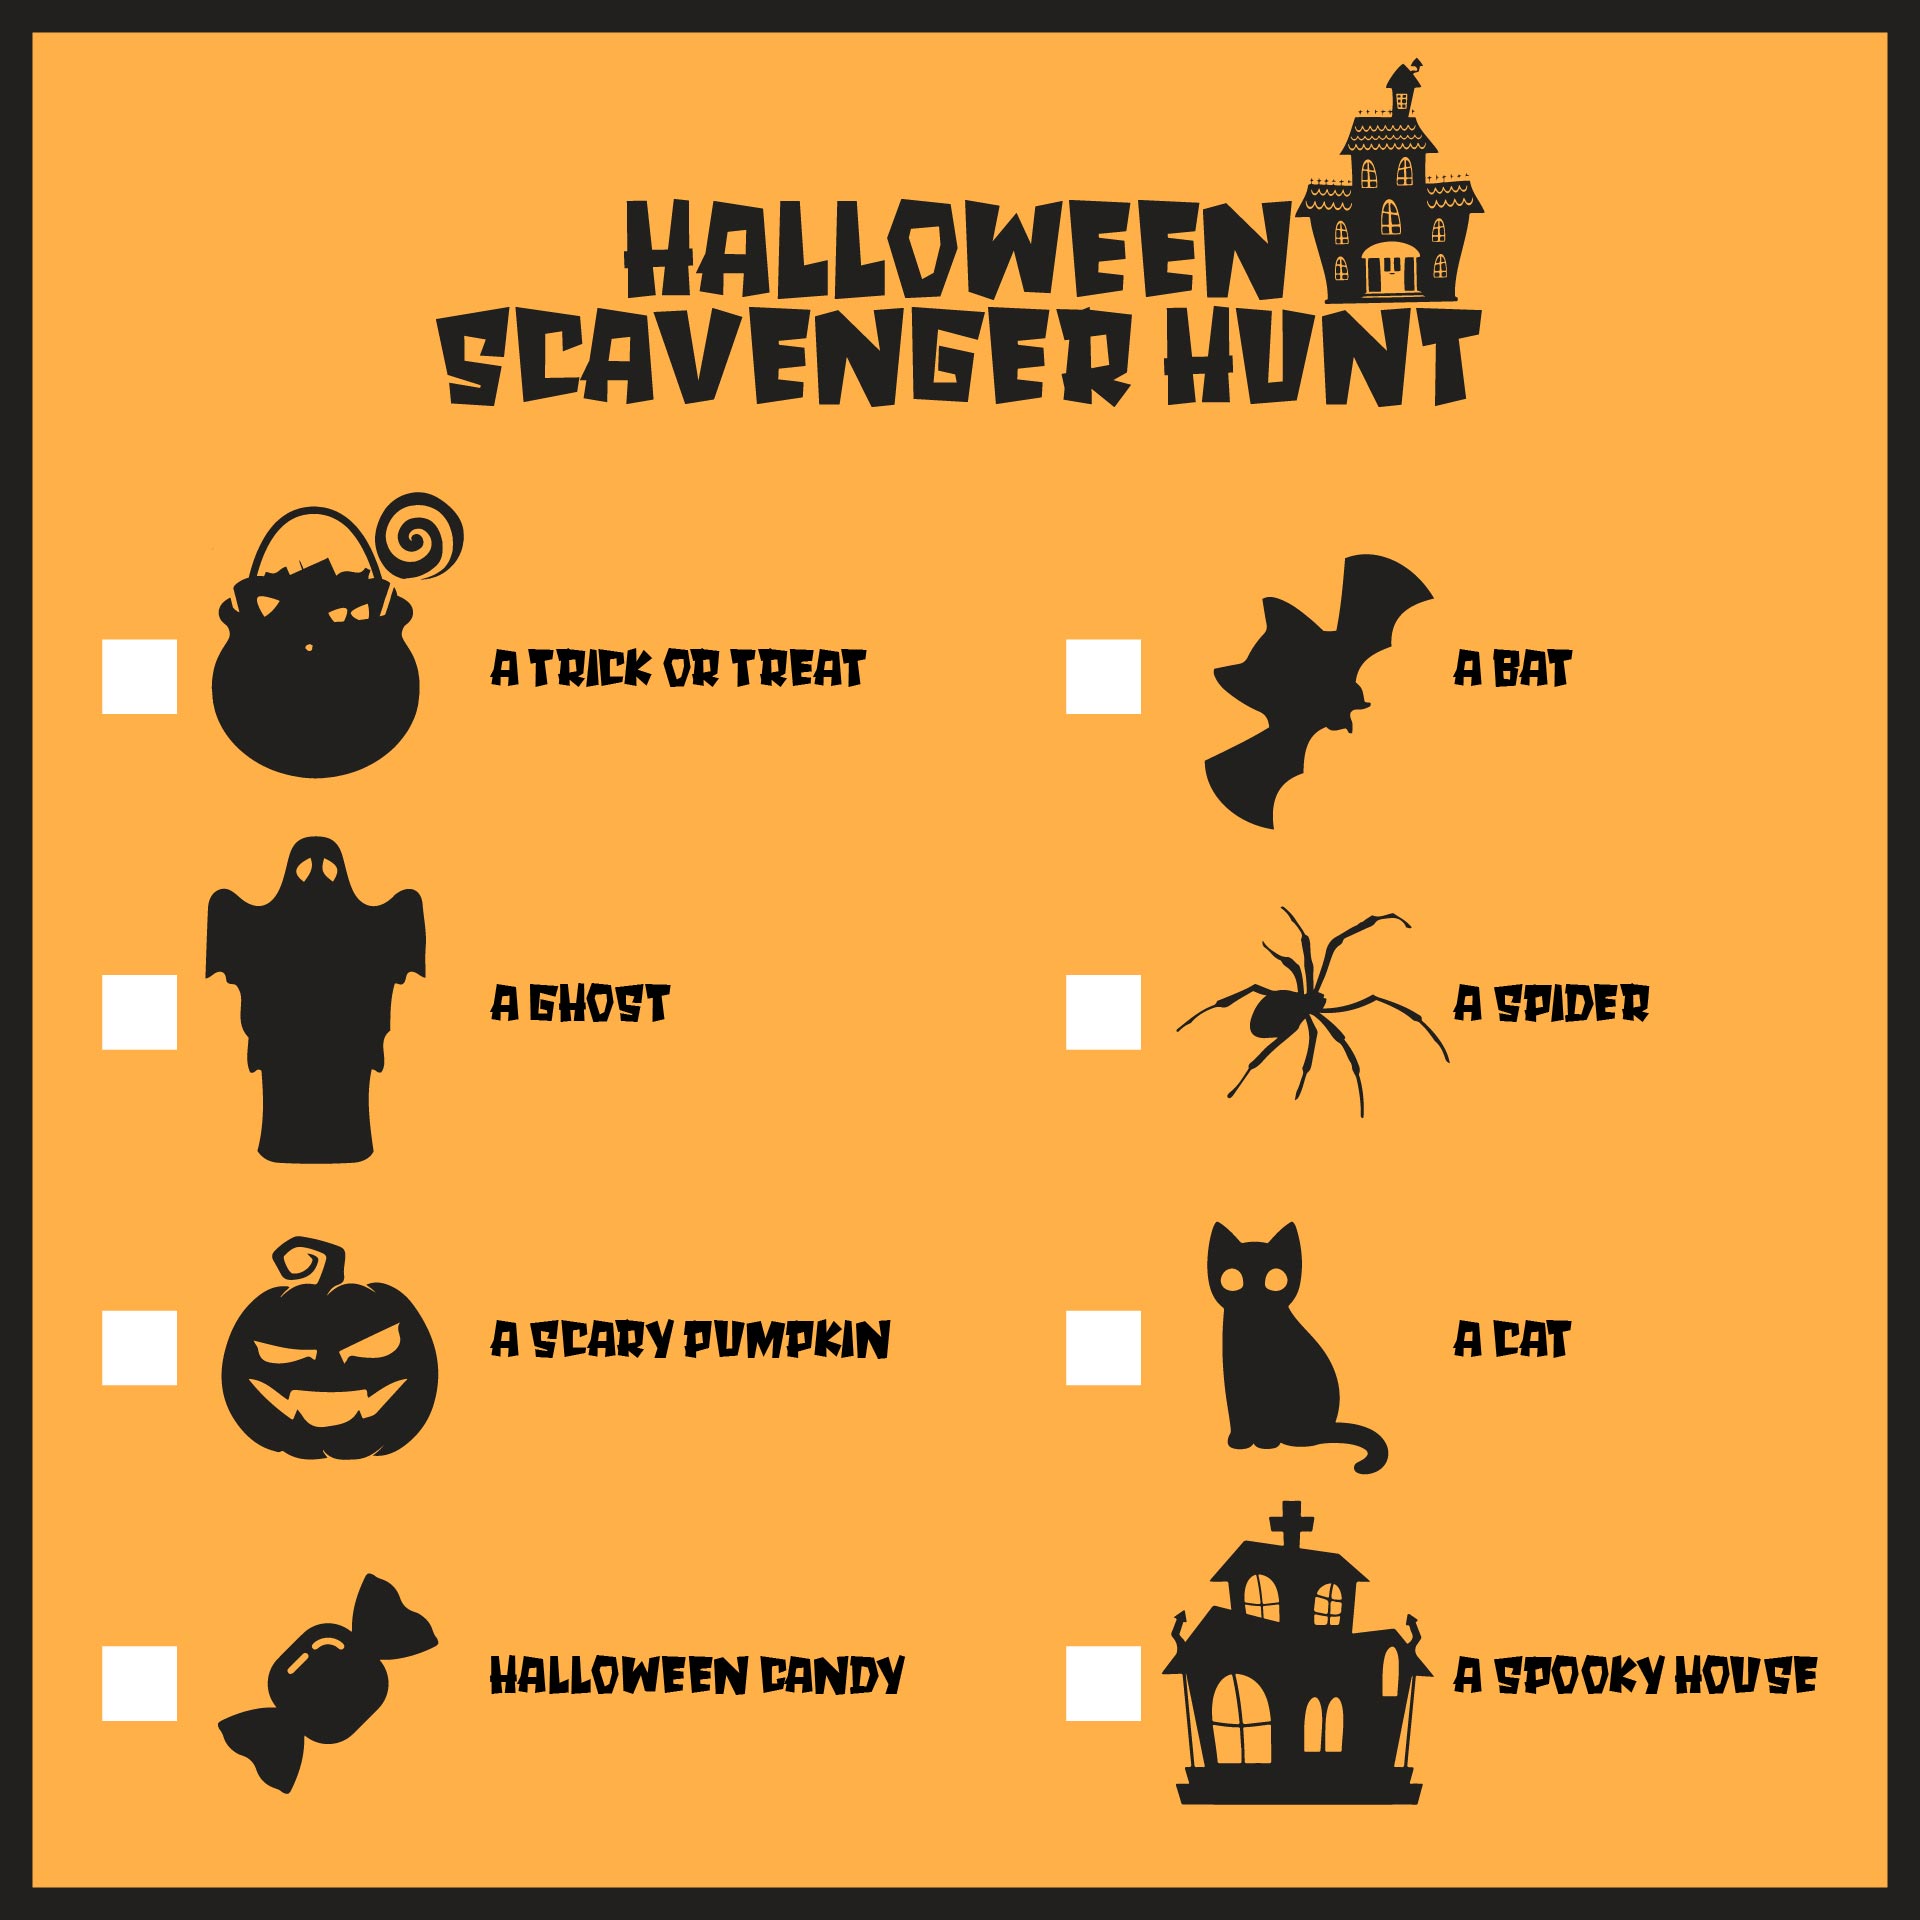 Free Printable Halloween Scavenger Hunt Cards